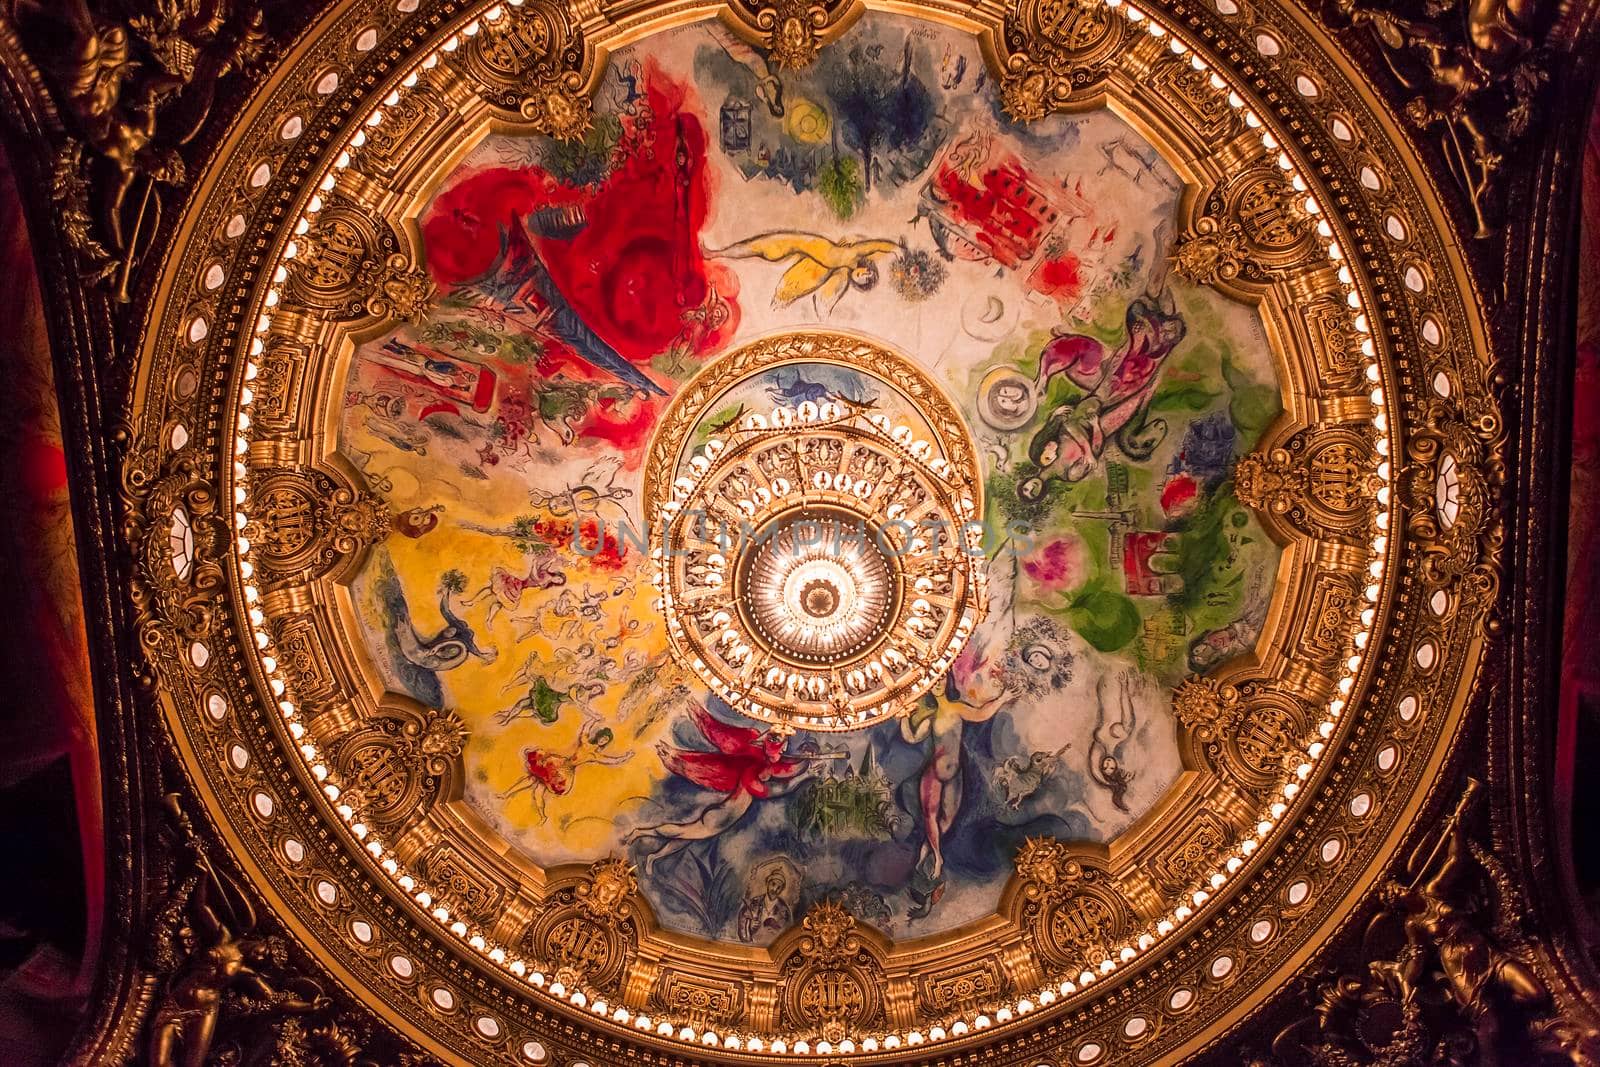 The Palais Garnier, Opera of Paris, interiors and details by photogolfer